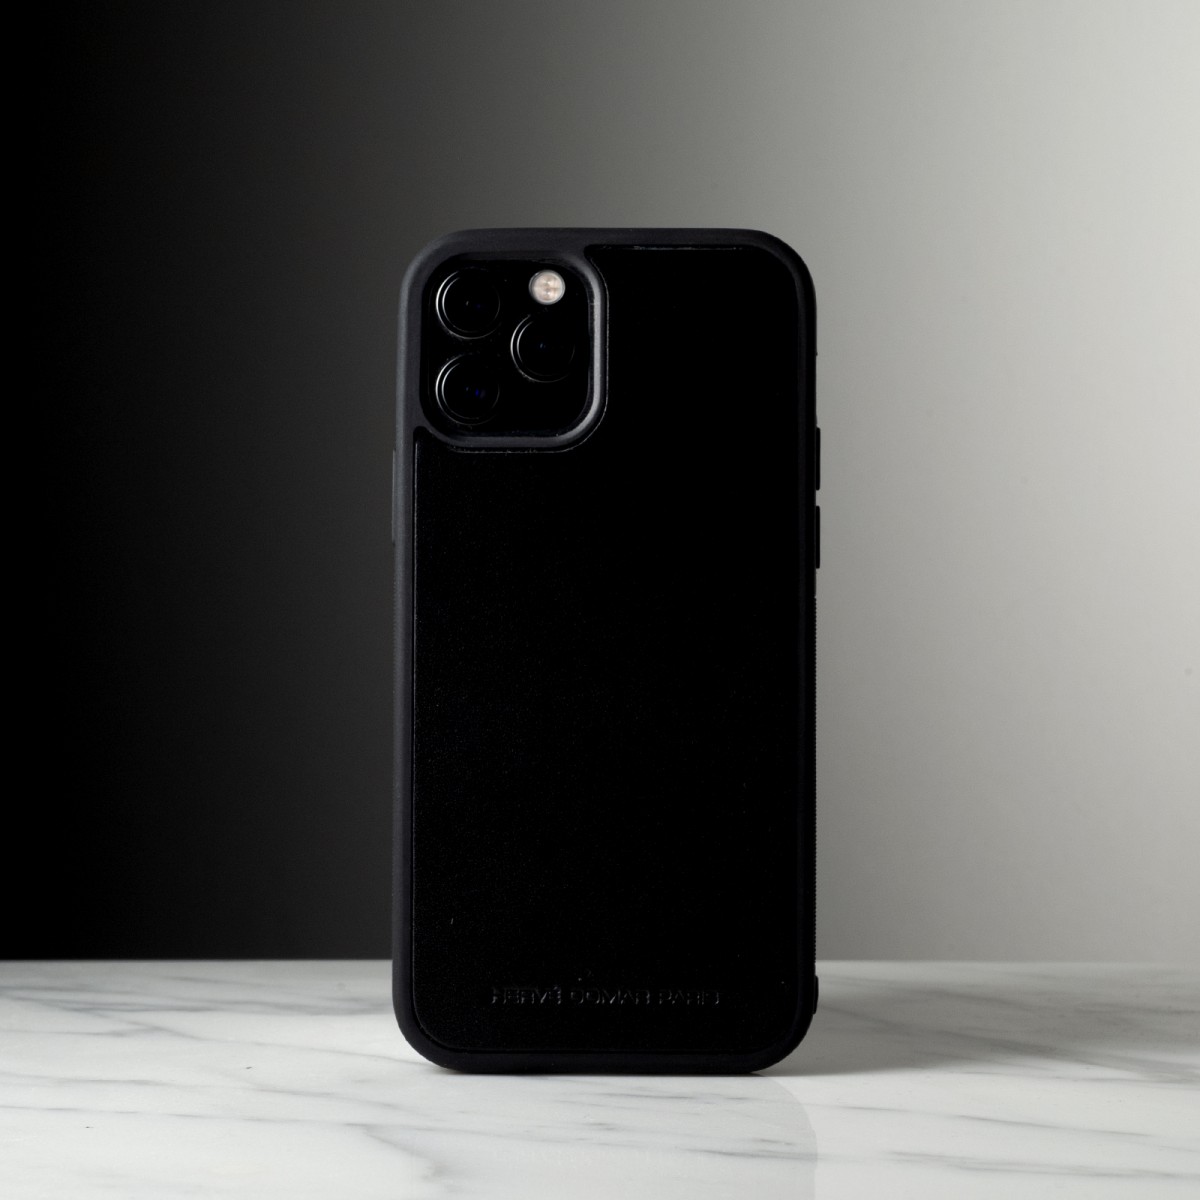 COQUE 12 IPHONE - Coque iPhone en cuir fabriqué à la main en Italie